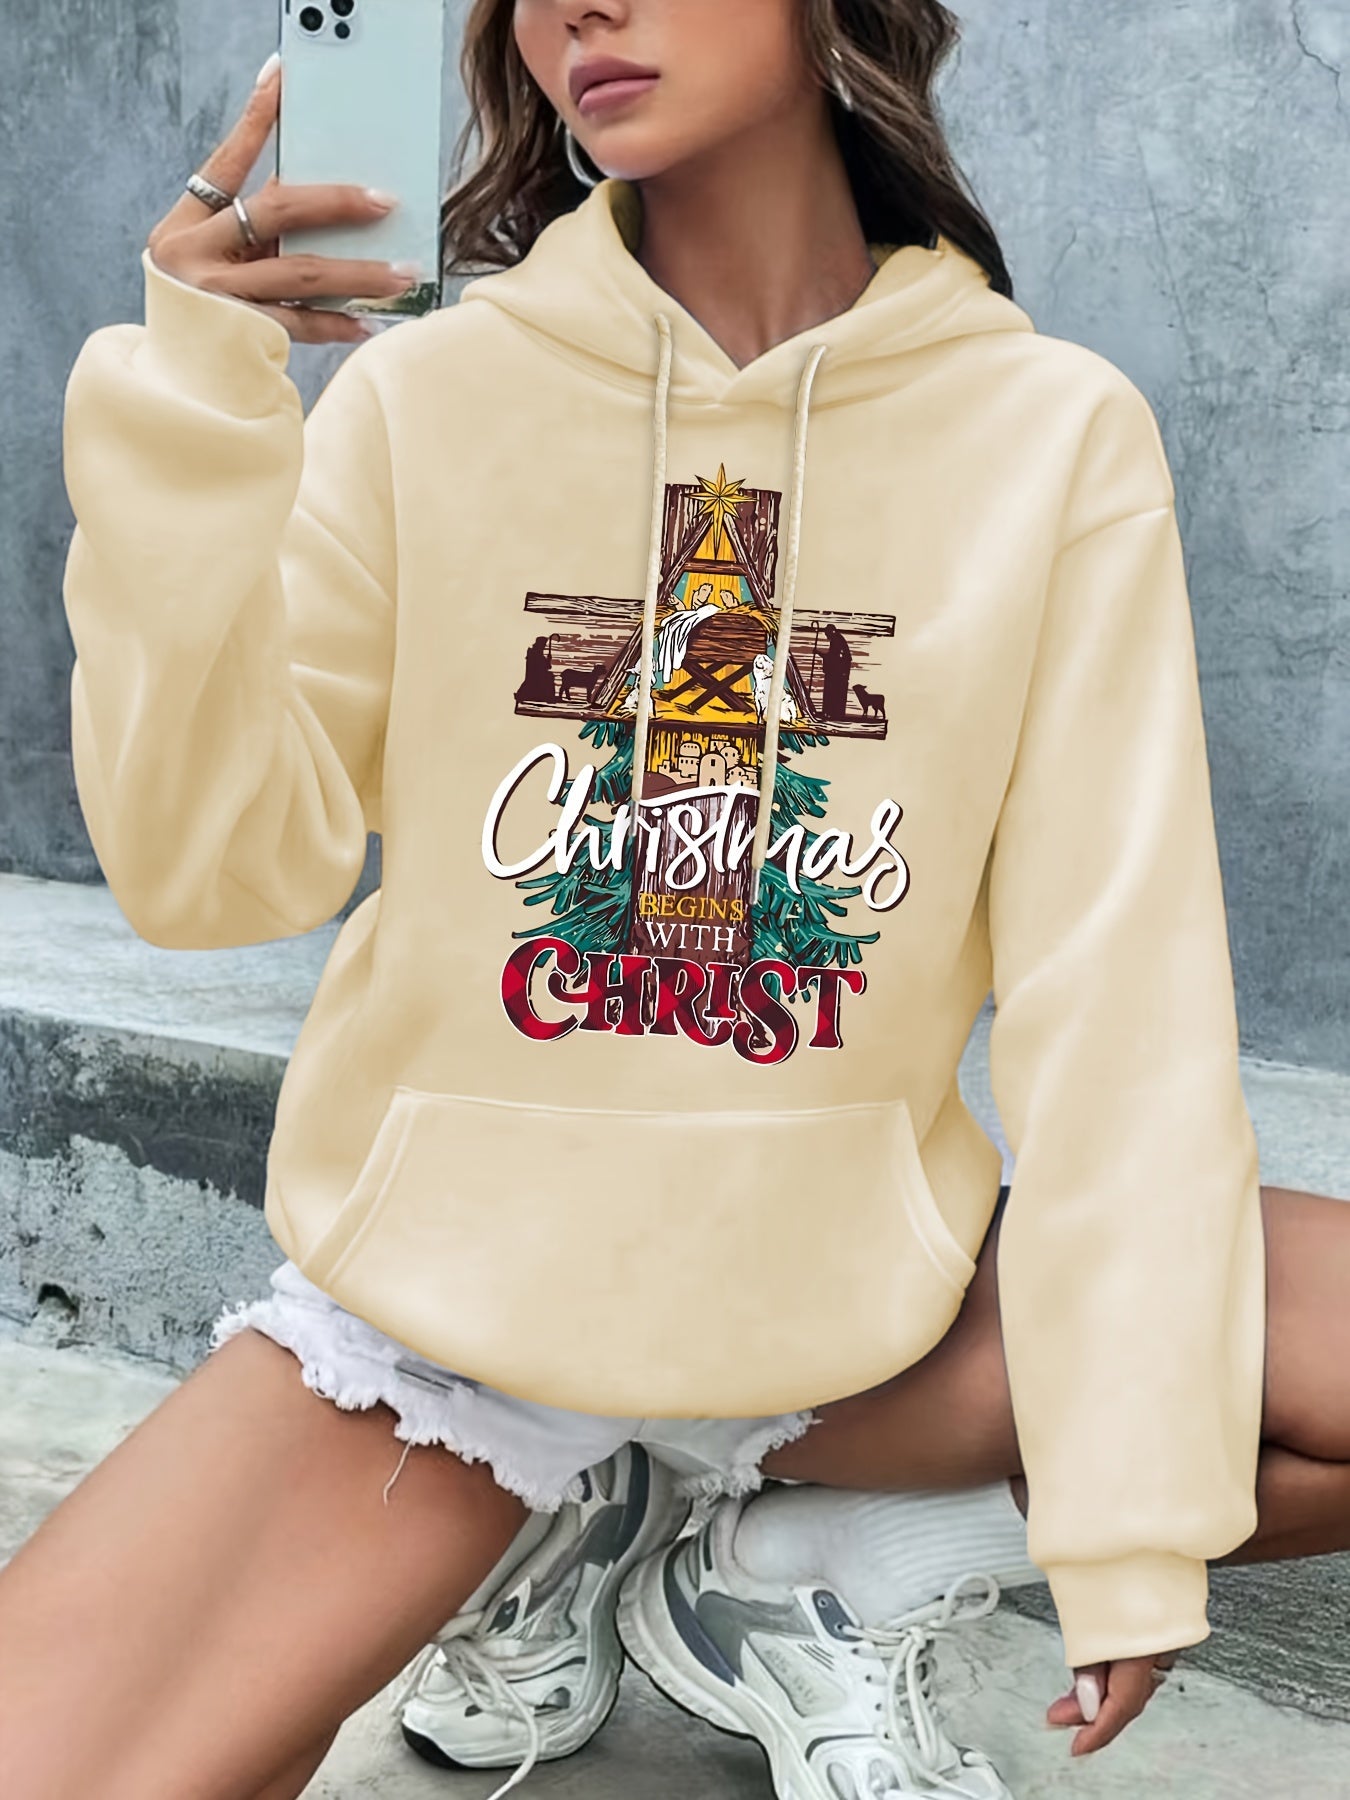 Christmas Begins With Christ Women's Christian Pullover Hooded Sweatshirt claimedbygoddesigns